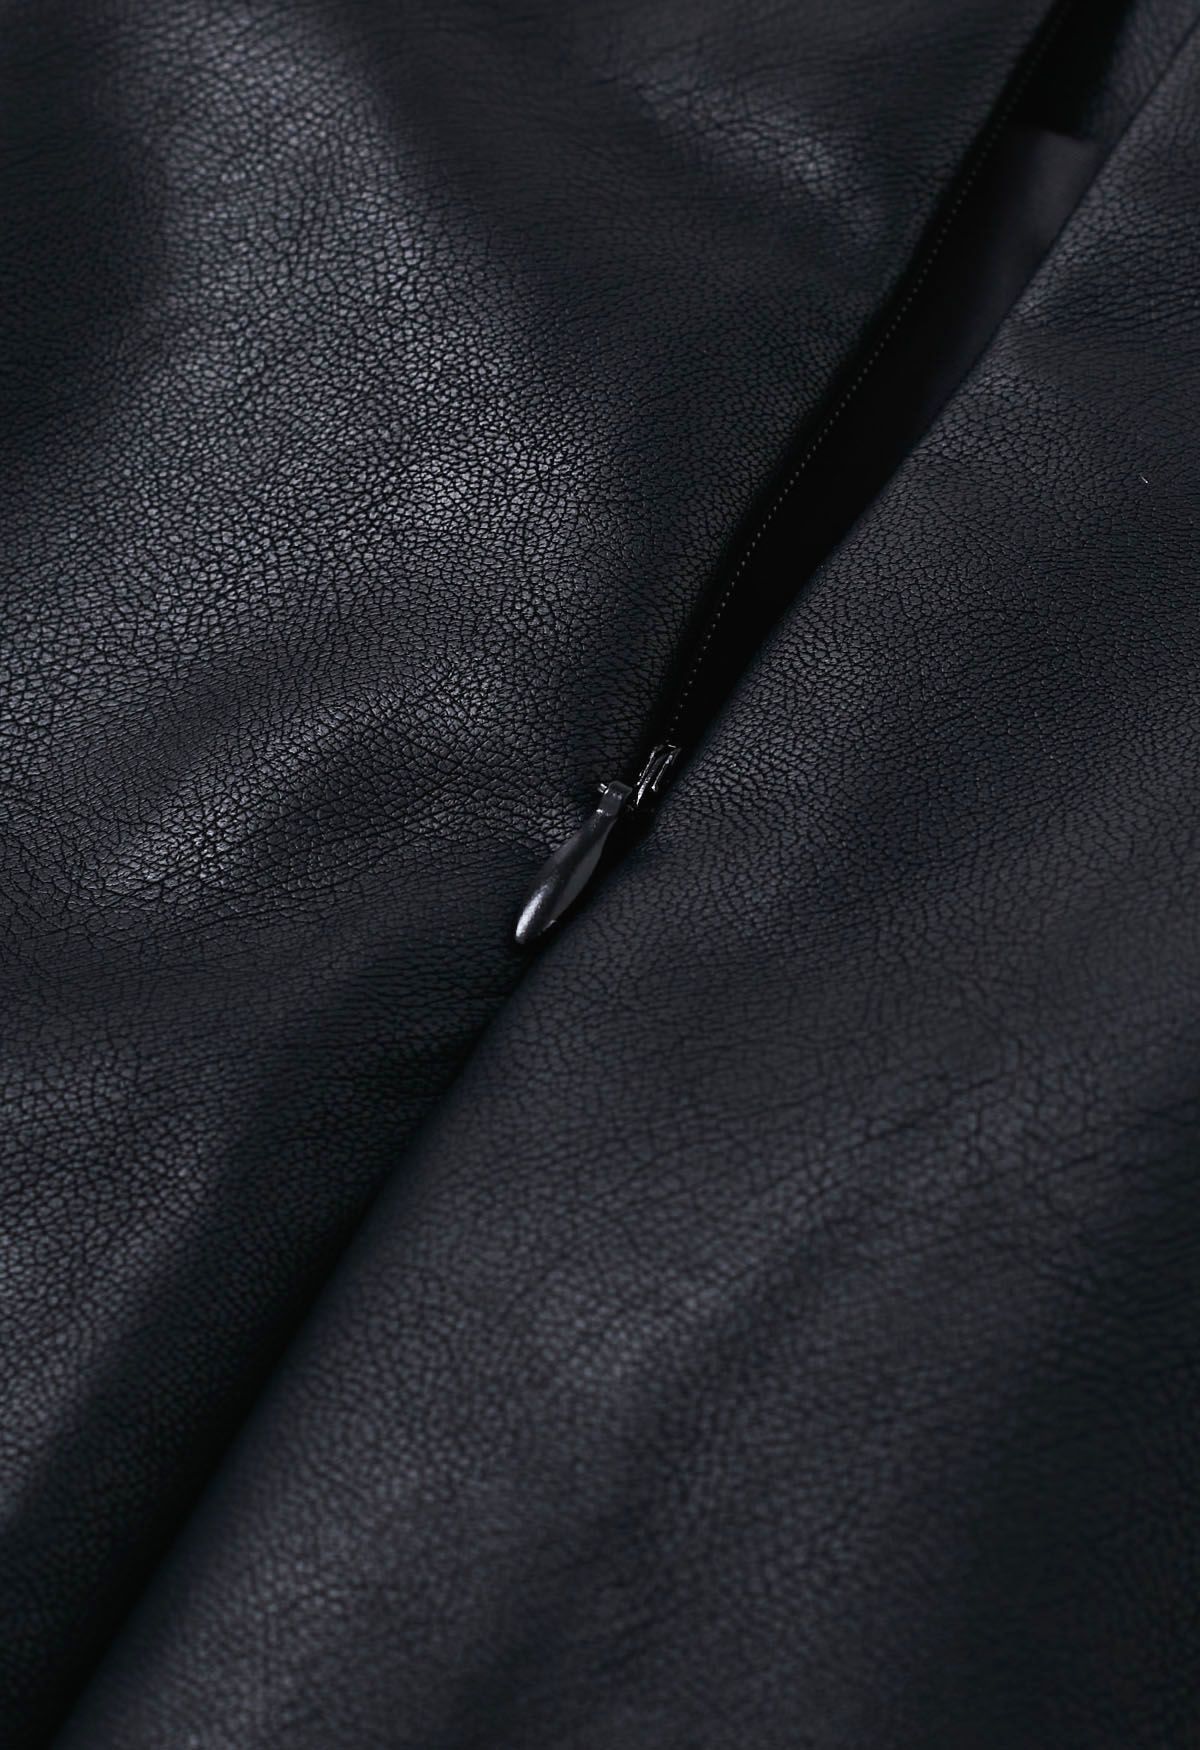 Notch Waistline Faux Leather Midi Skirt in Black